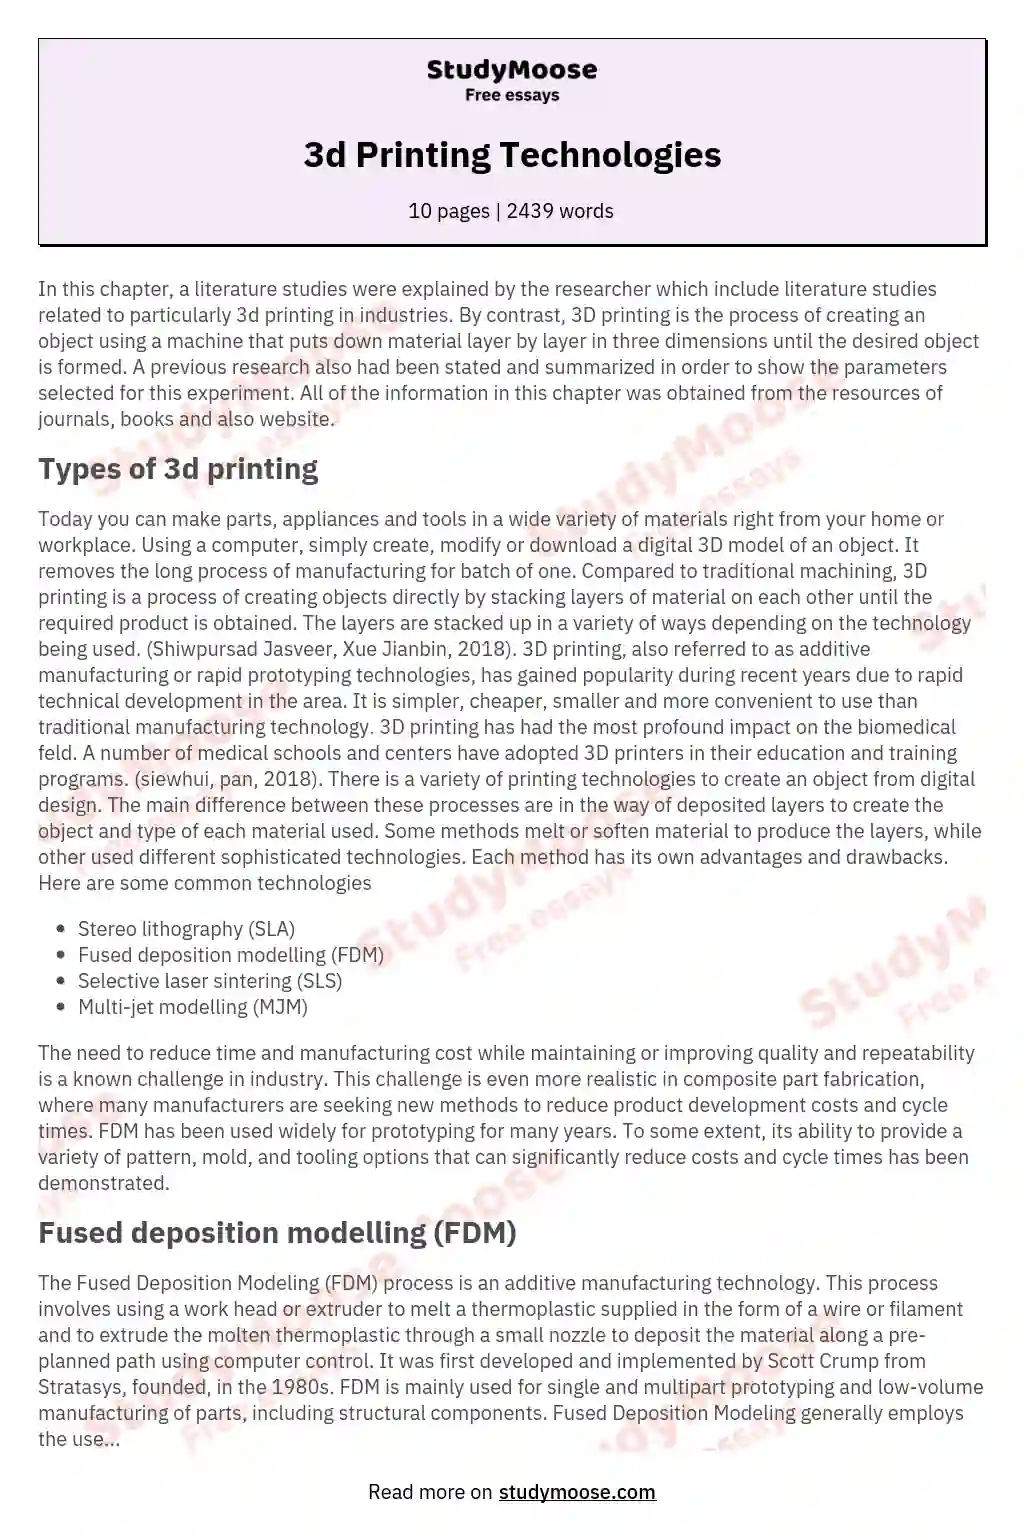 3d Printing Technologies essay